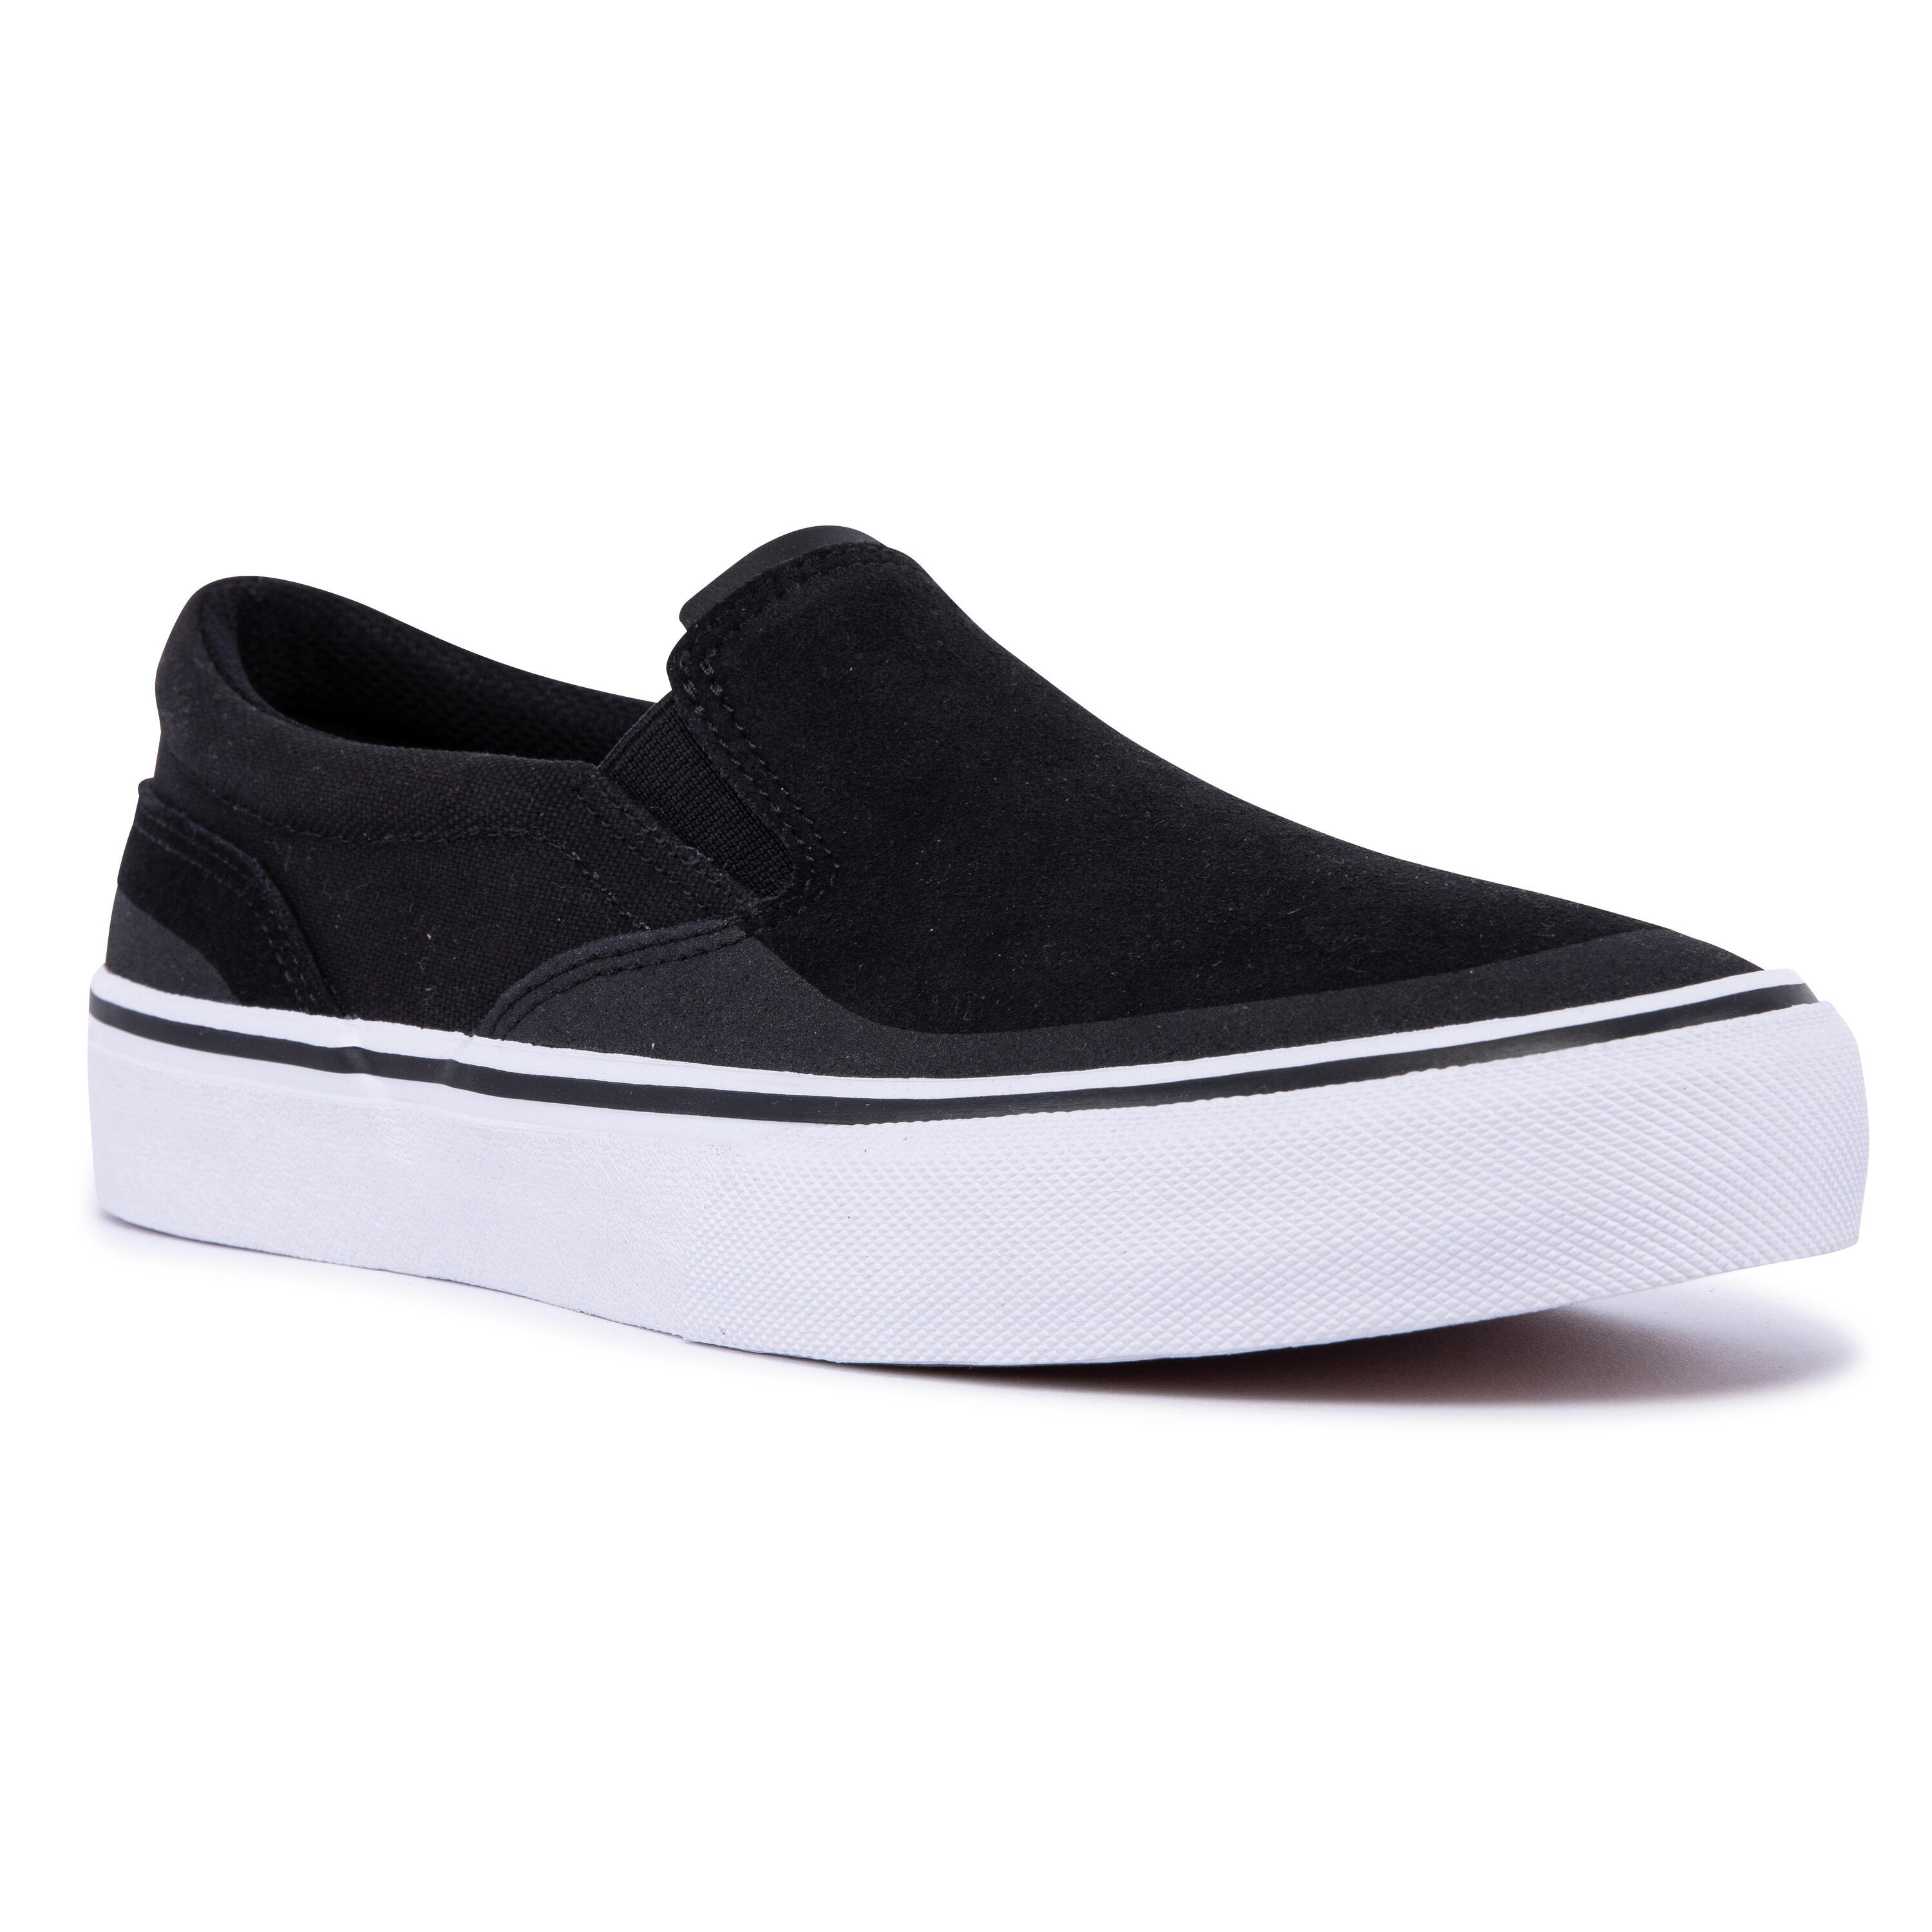 Vulca 500 Adult Low-Top Slip-On Skate Shoes - Black/White 1/12